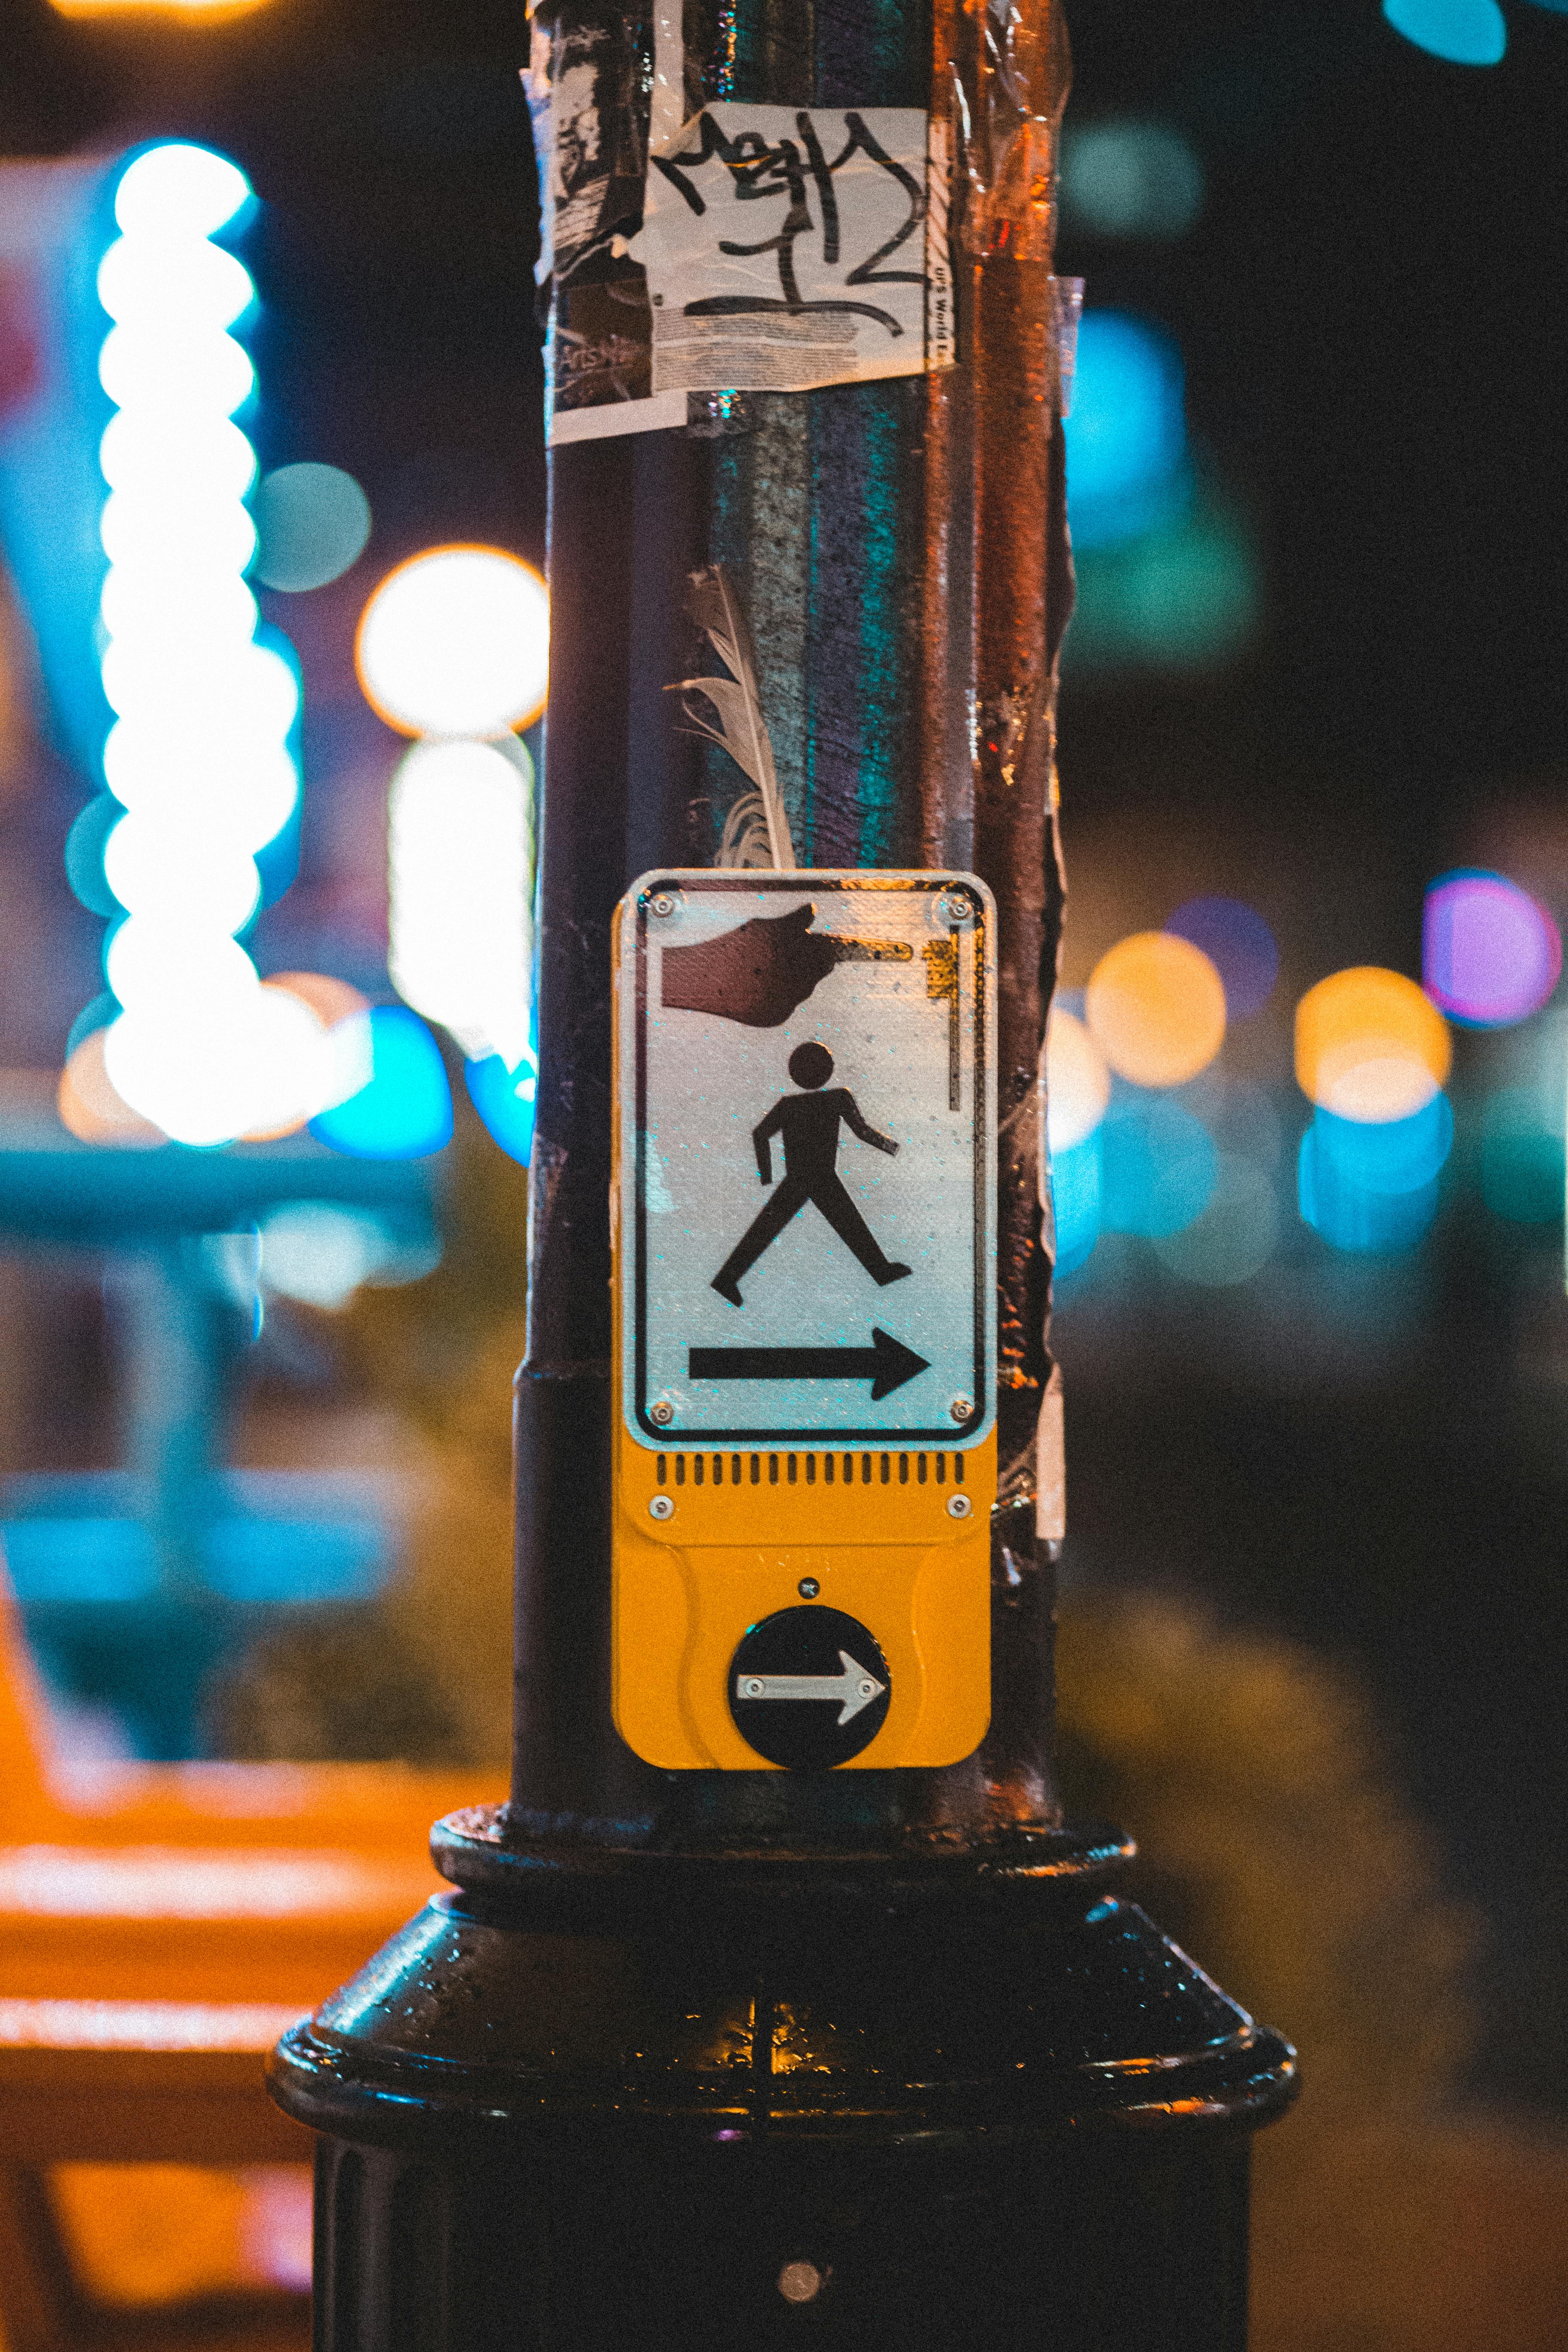 pedestrian crossing call button in street